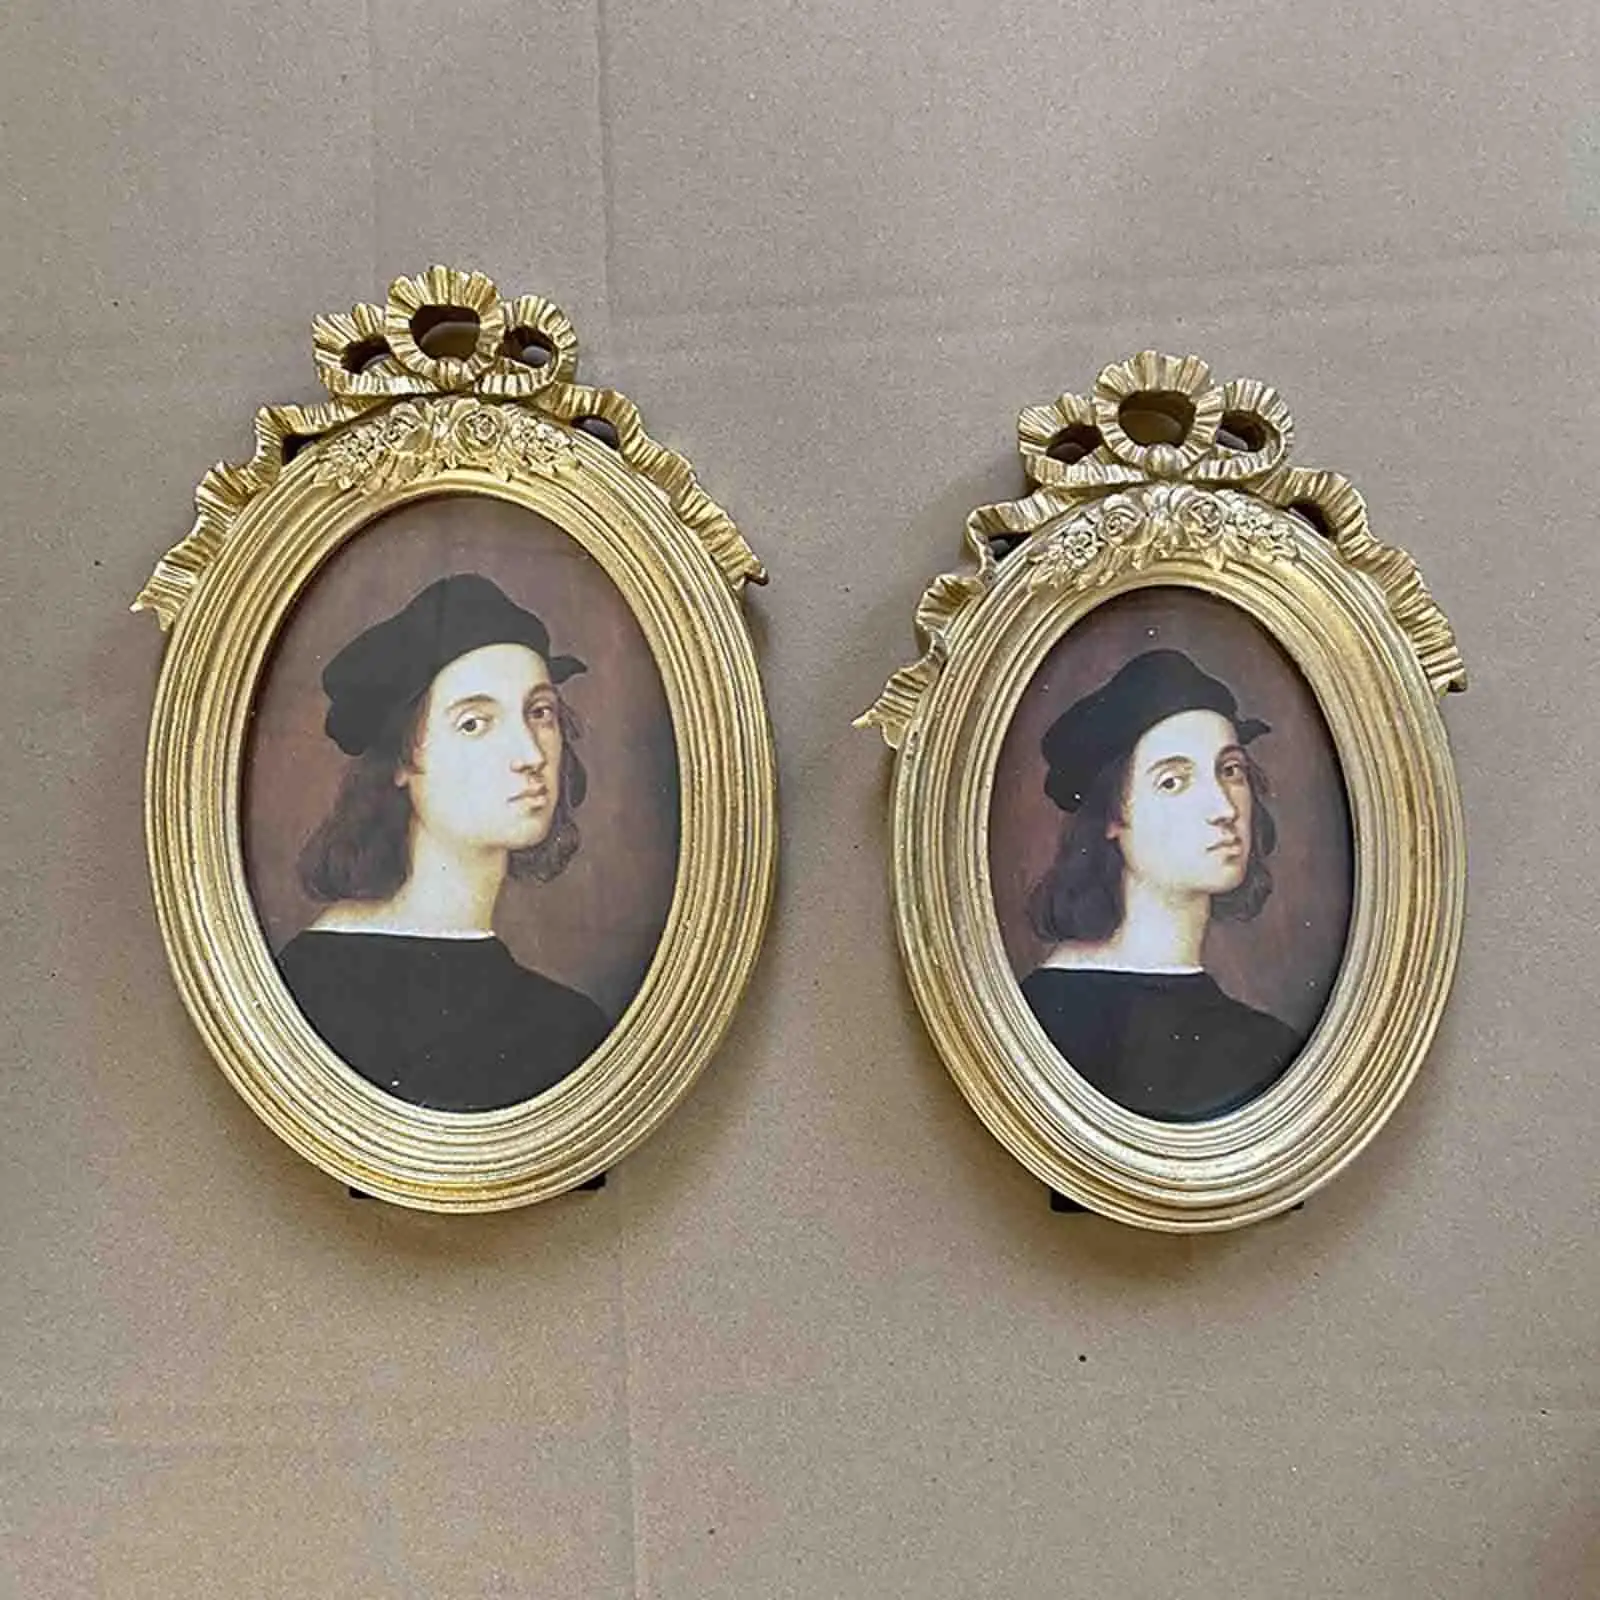 European Style Antique Oval Polyresin Photo Frame, Wall Mounting Gift Elegant Photo Gallery Art